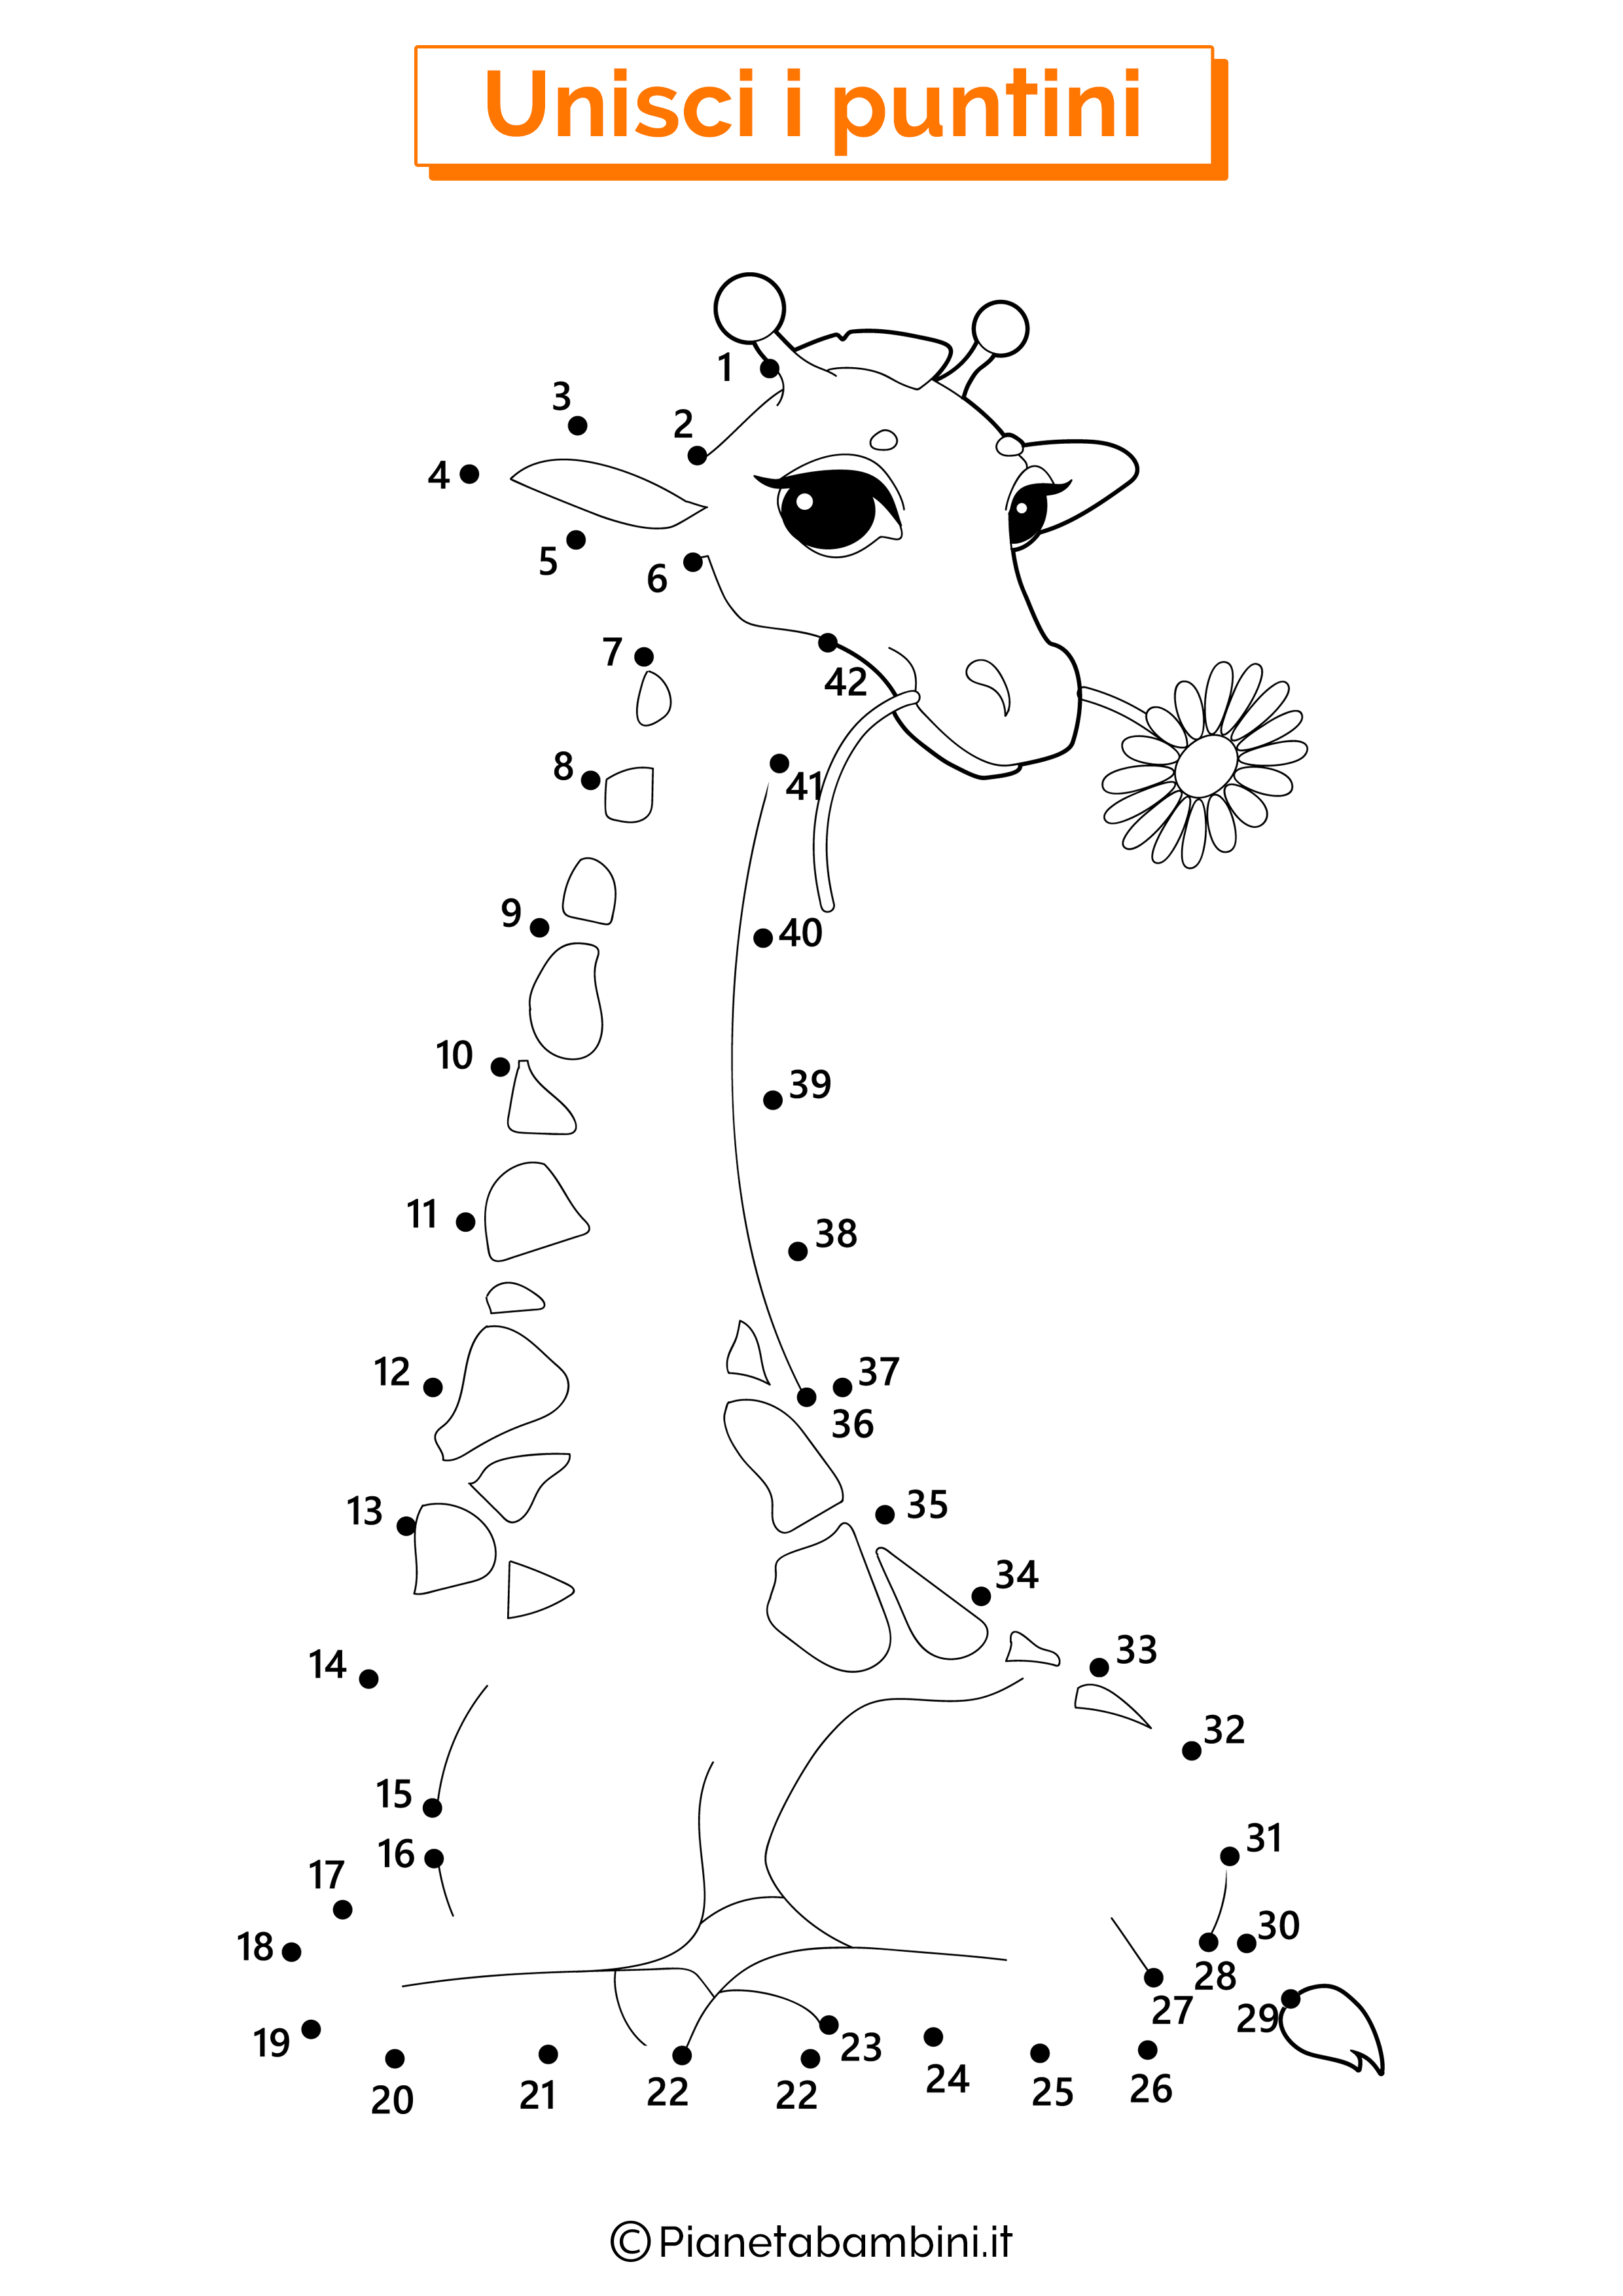 Disegno unisci i puntini 1-40 giraffa